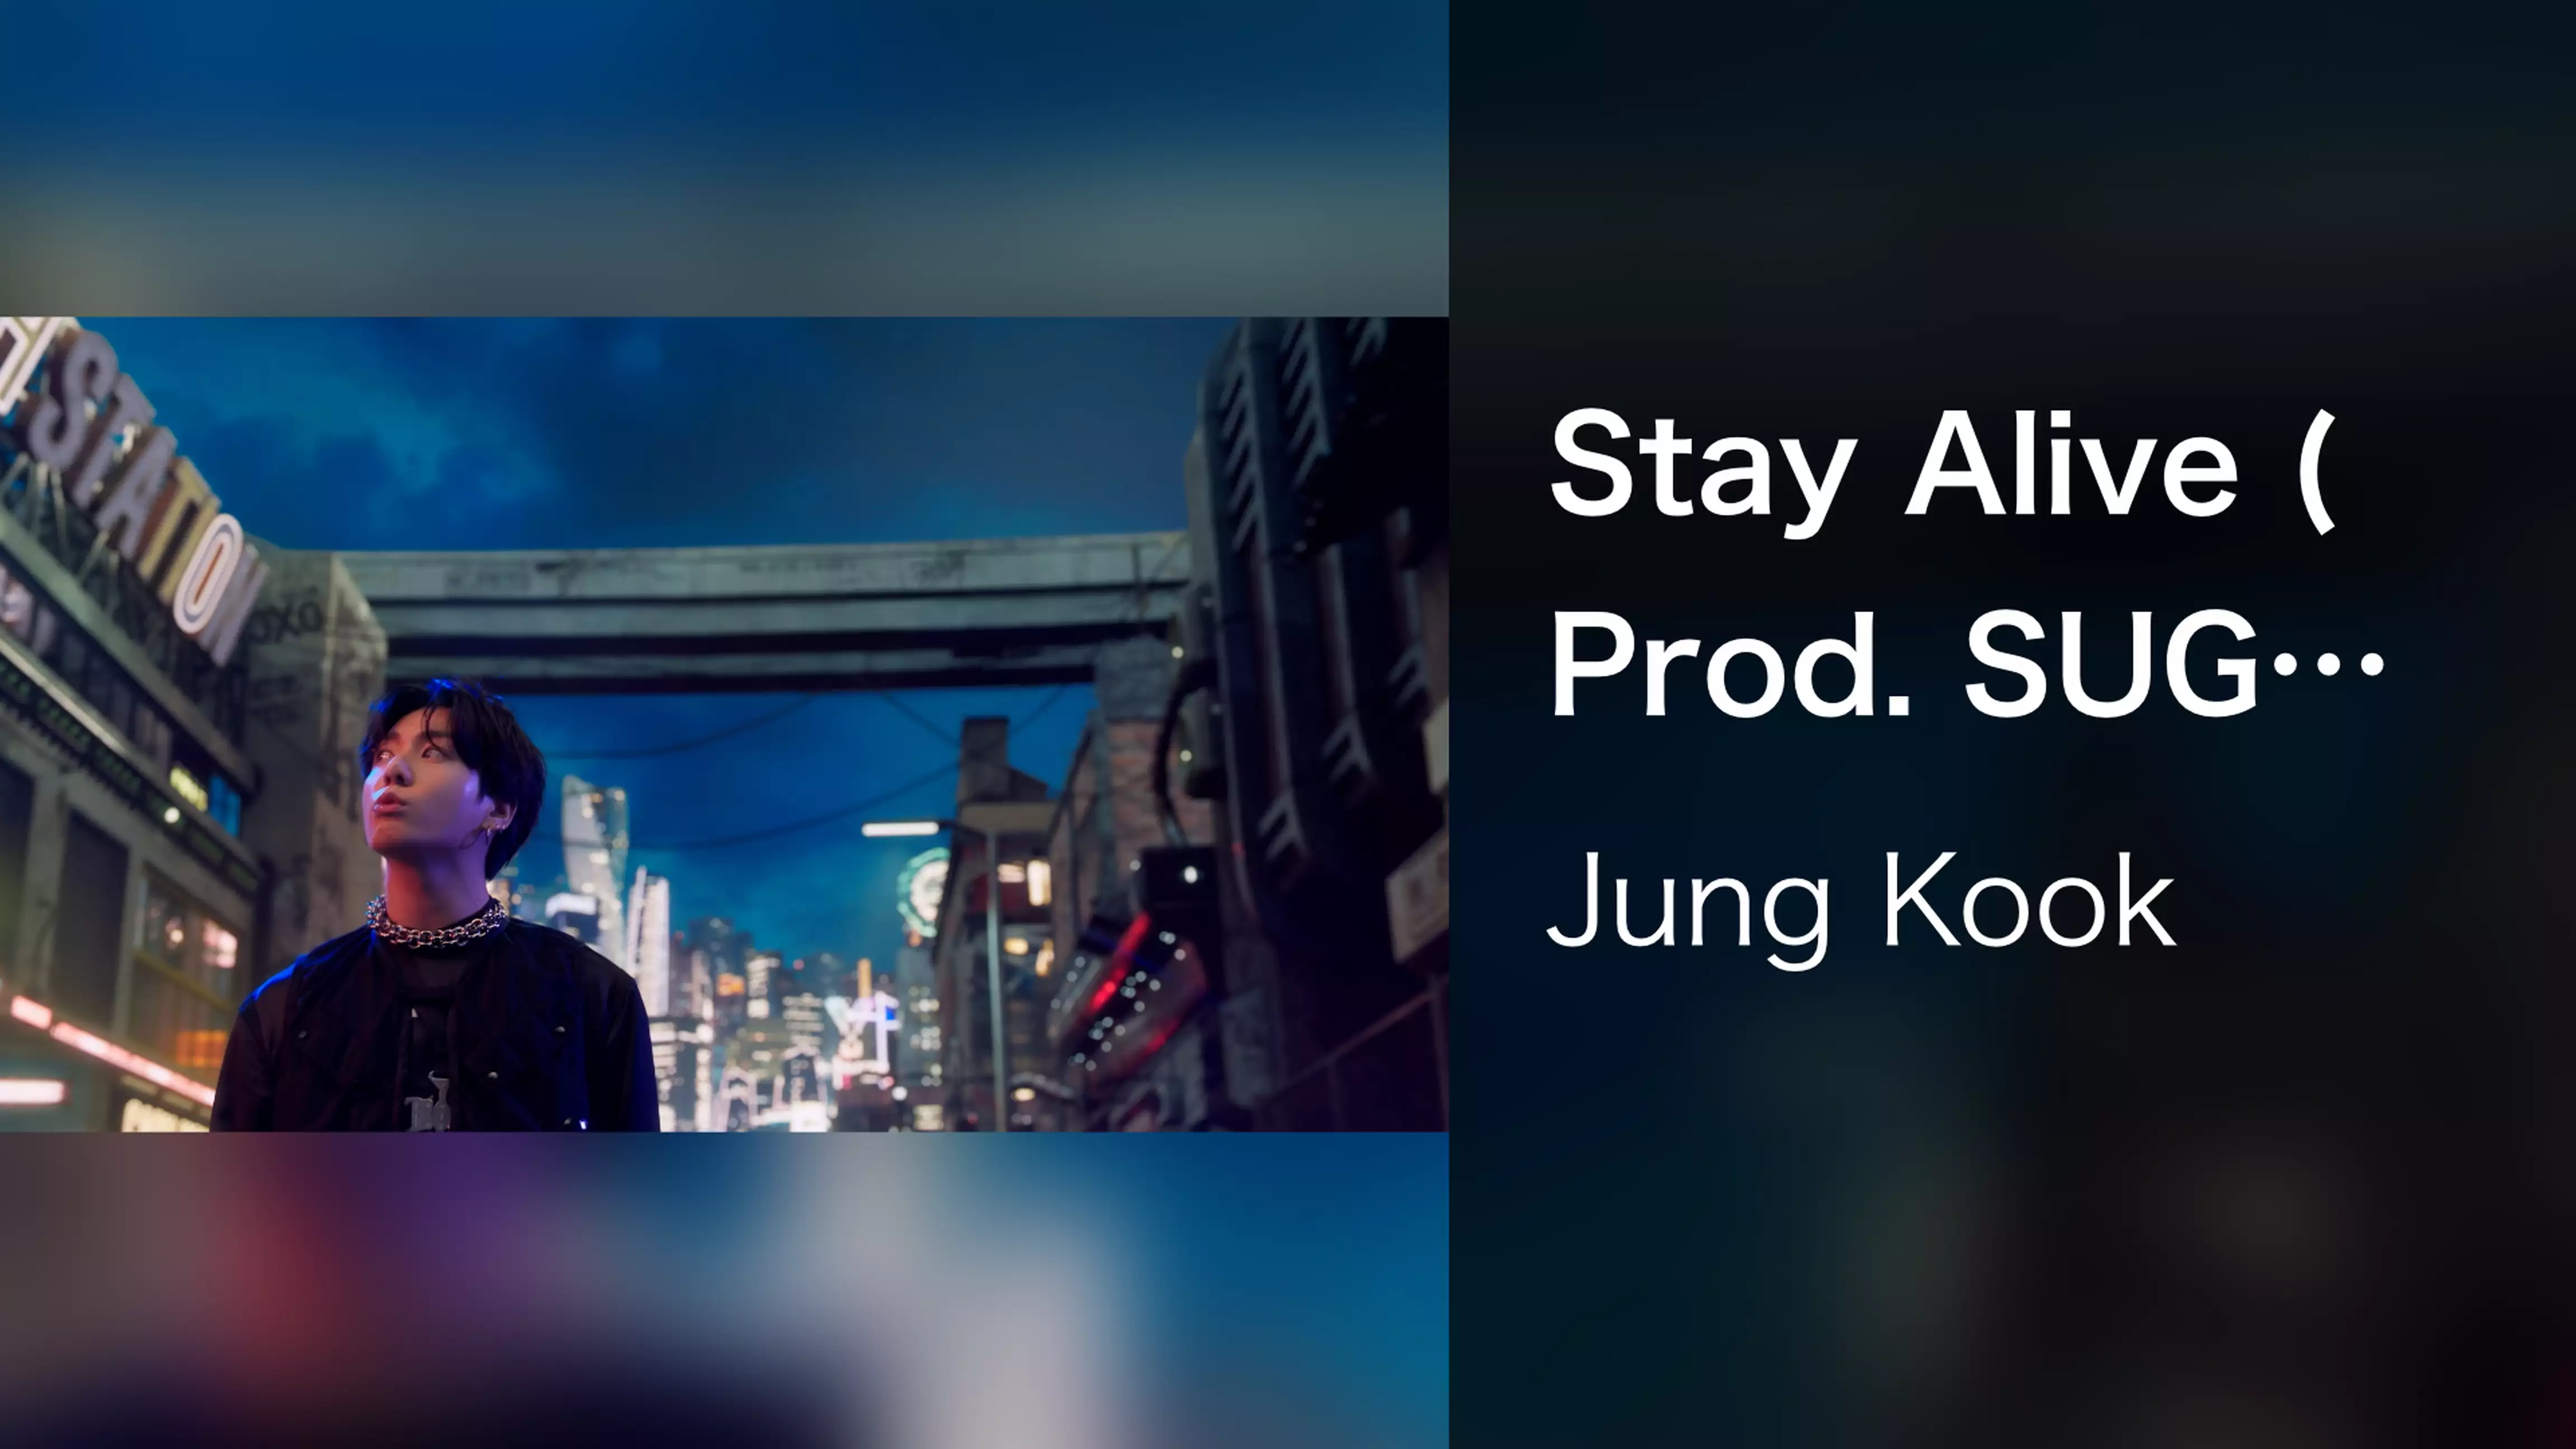 Stay Alive (Prod. SUGA of BTS)